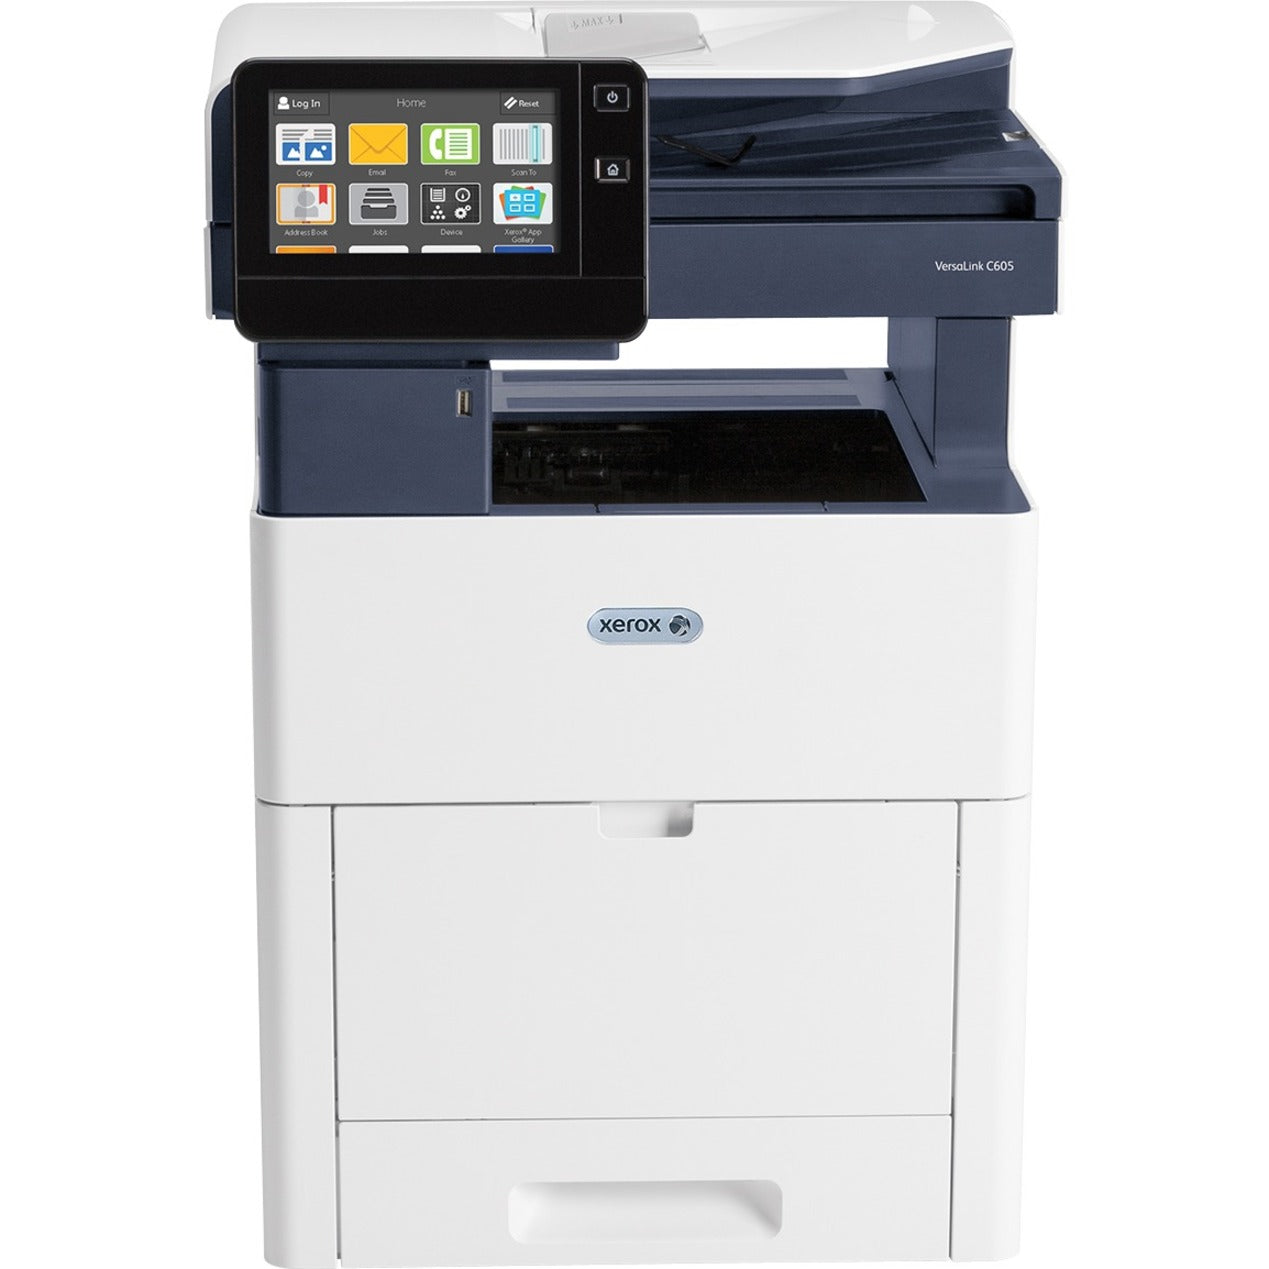 Xerox VersaLink C605 Color Multifunction Printer [Discontinued]